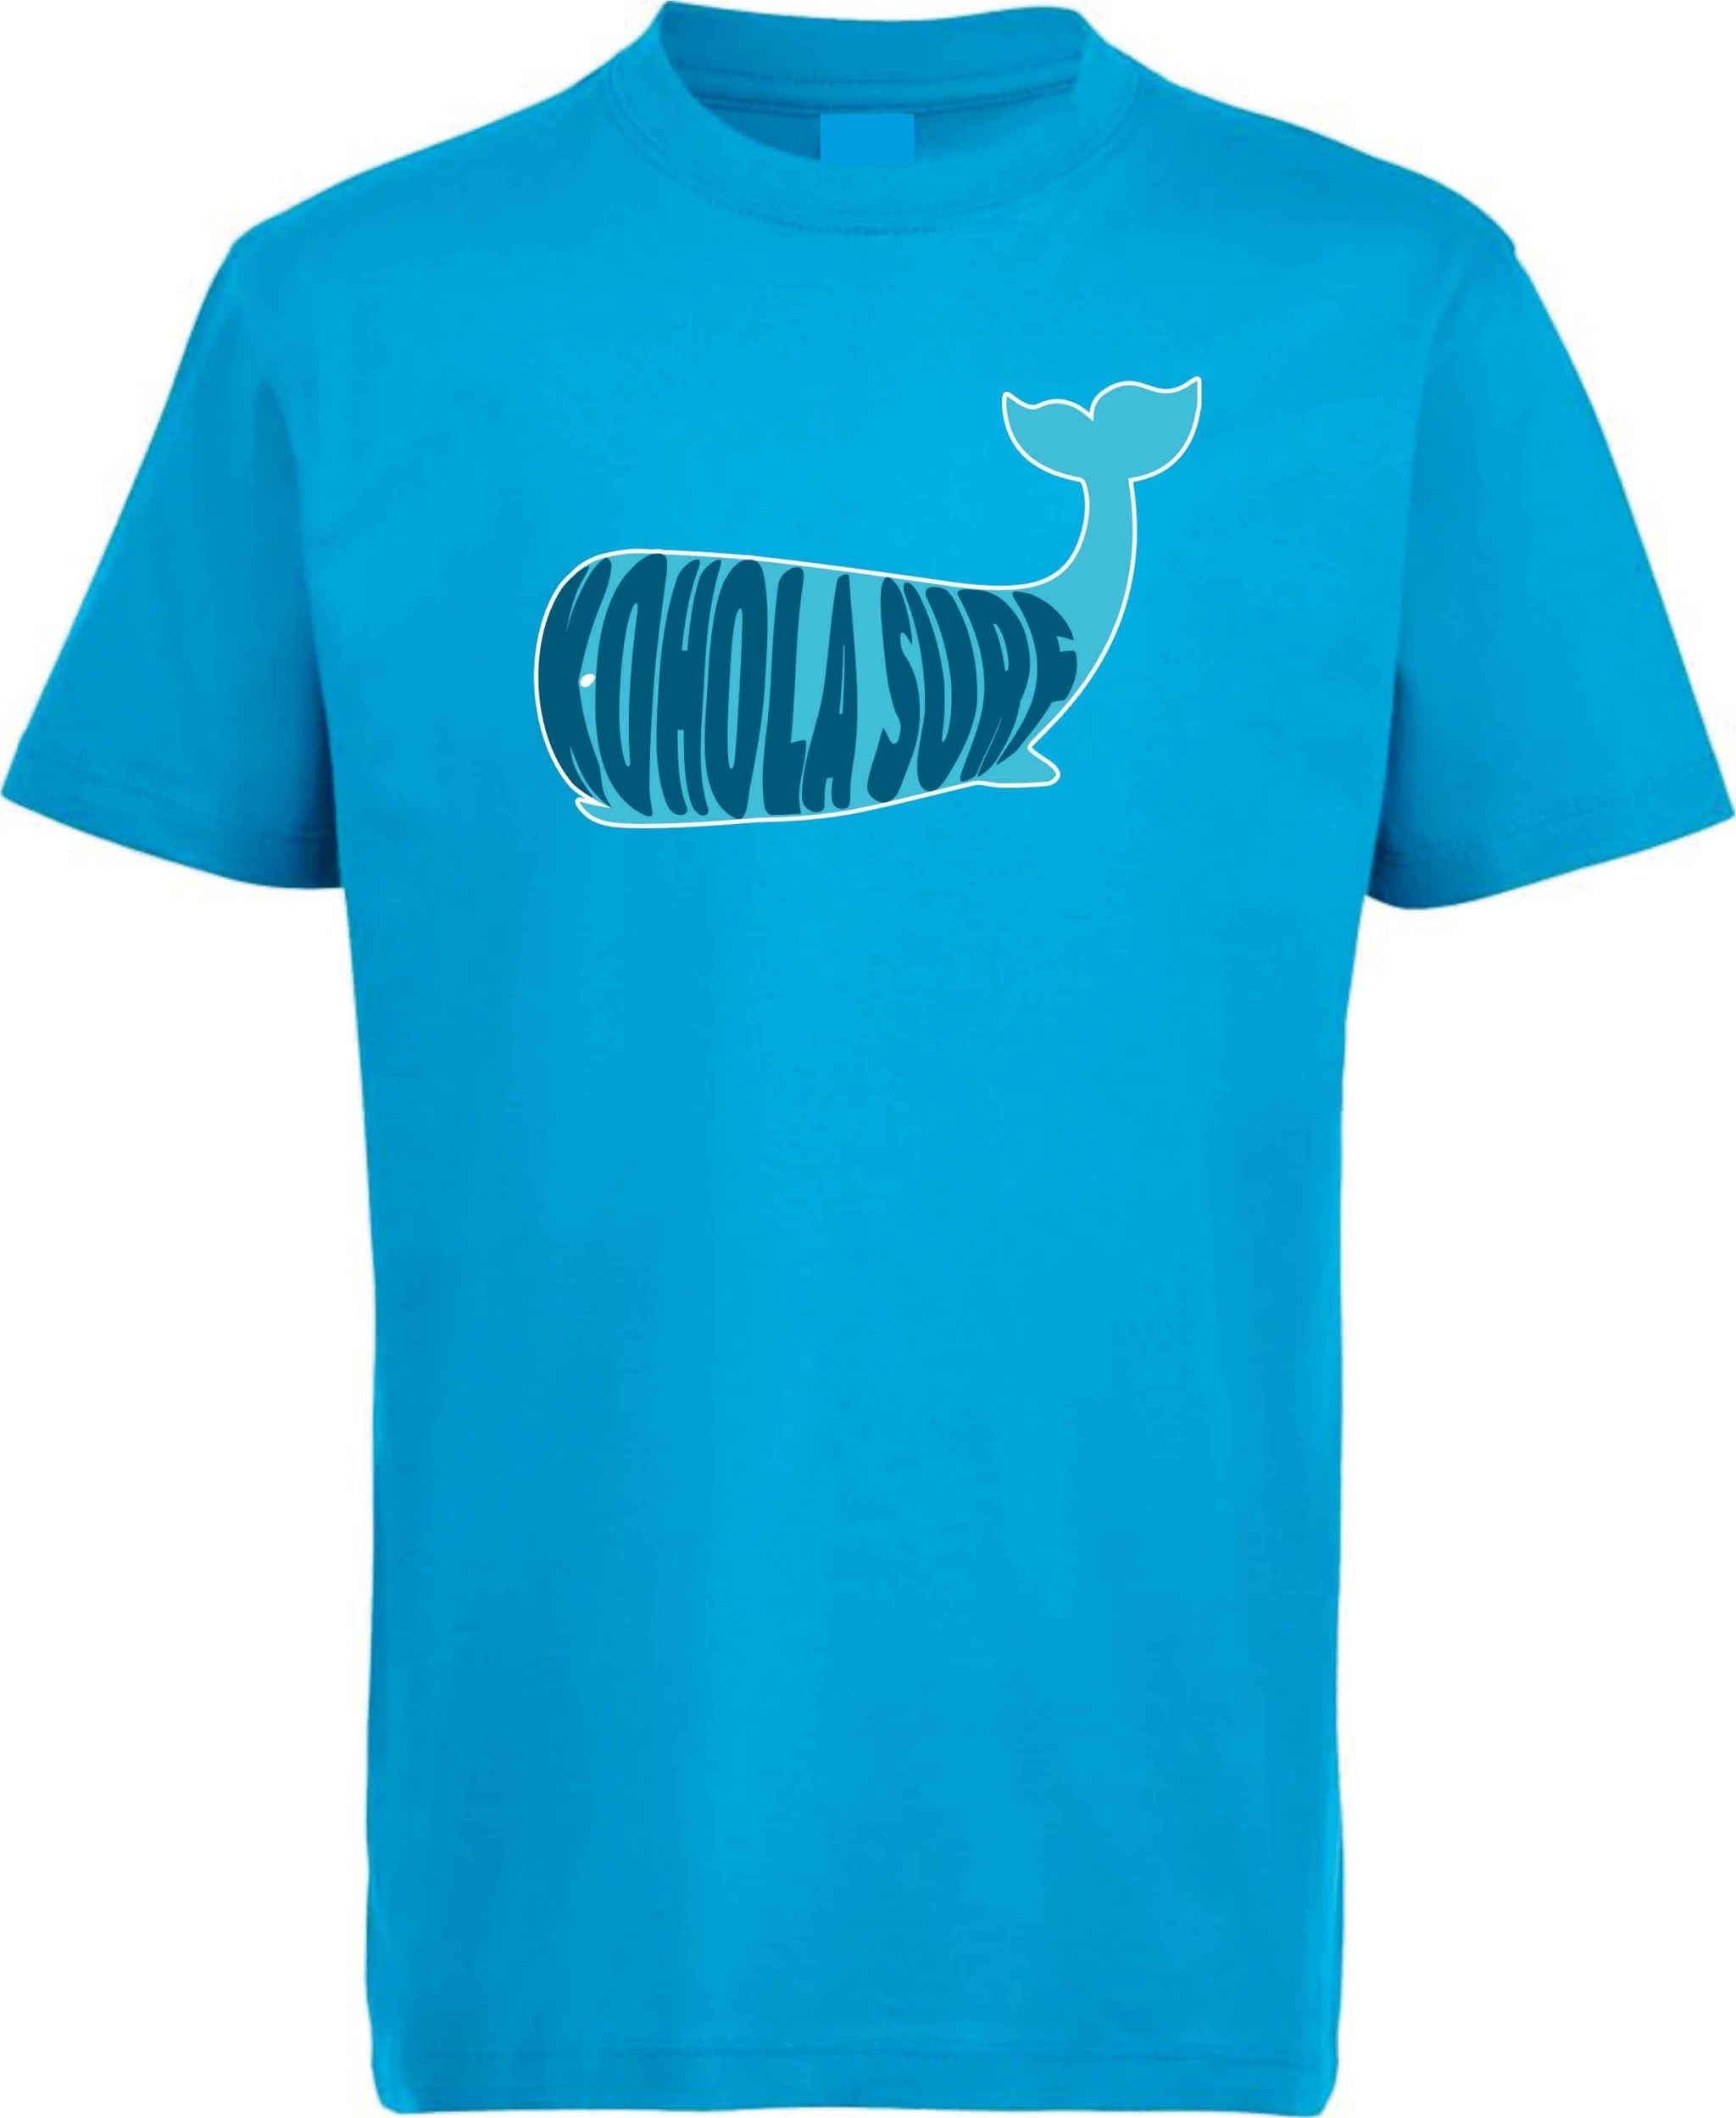 Kohola Whale Kids T-Shirt